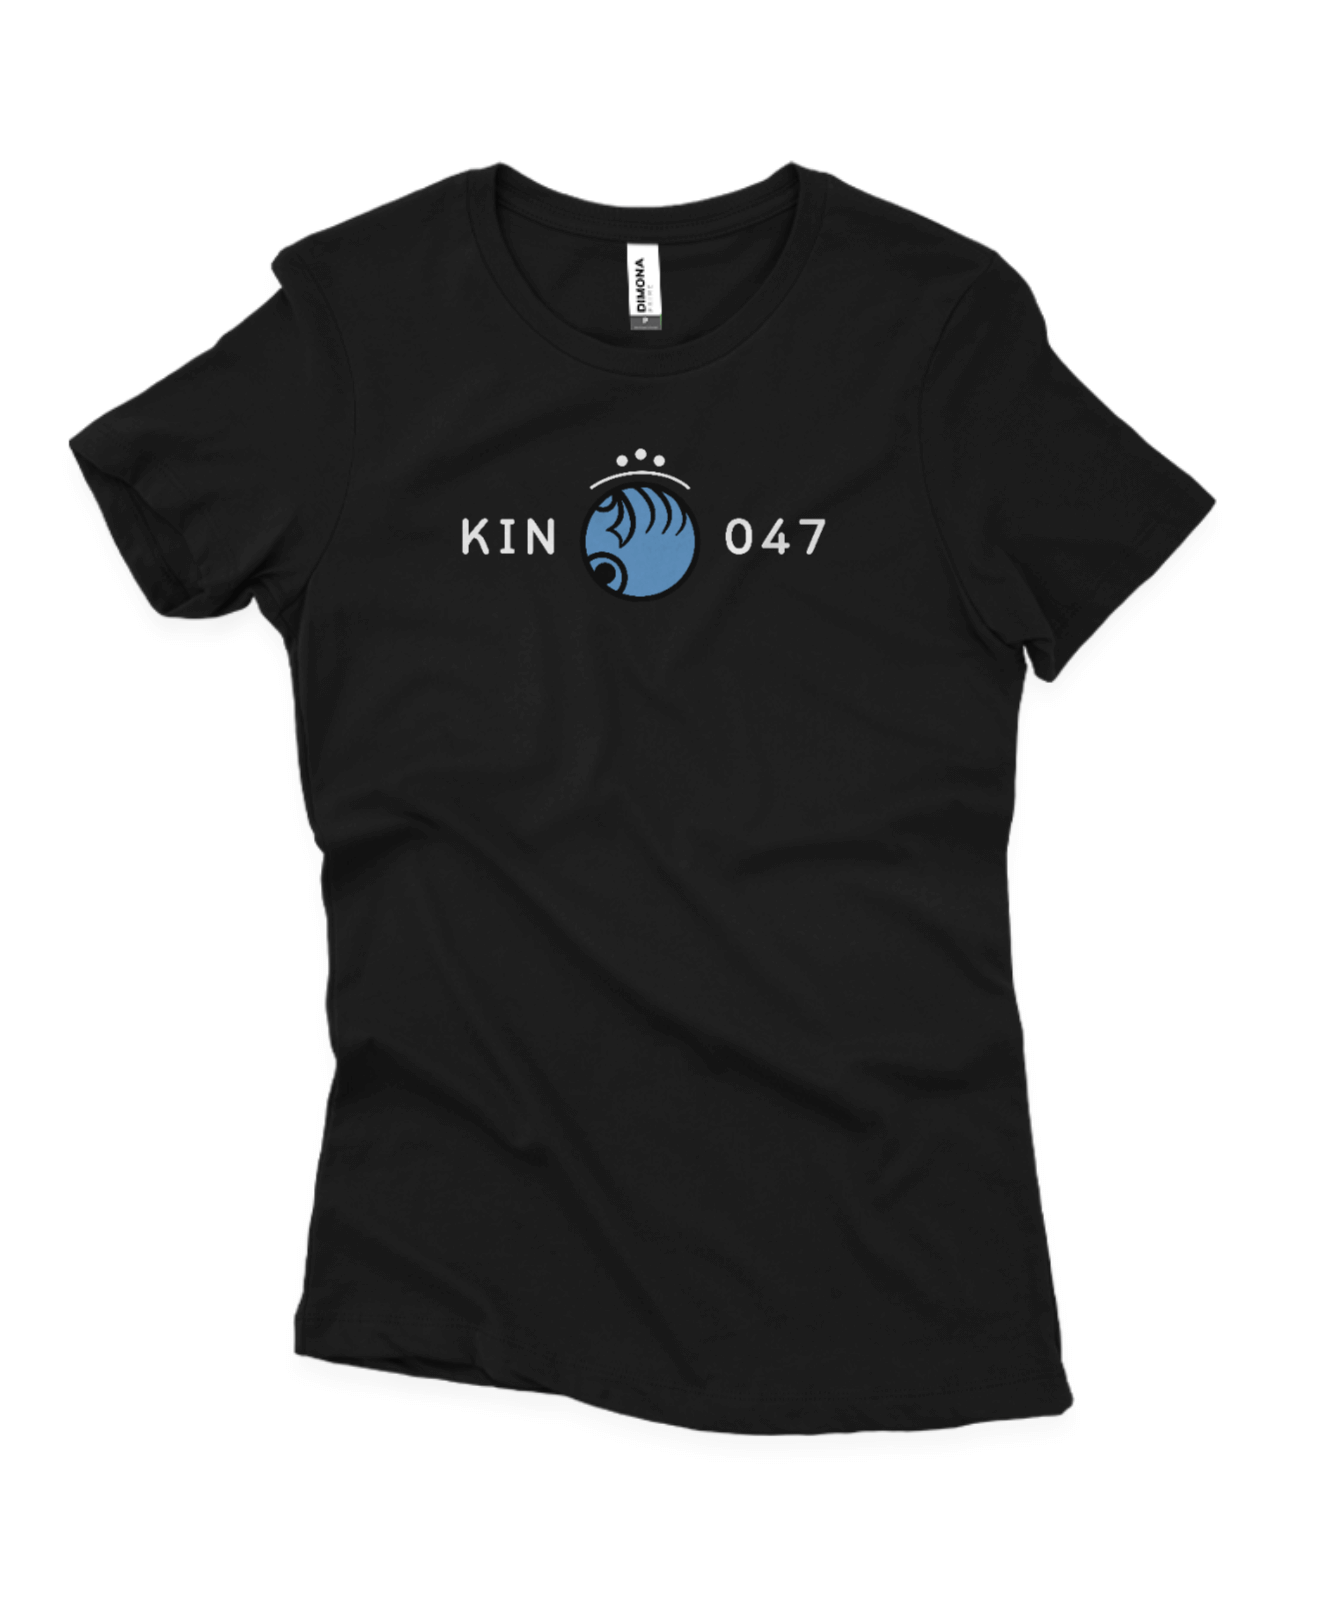 Camisa Feminina Preta Kin 047 - Mão Galáctica Azul - Kin 47